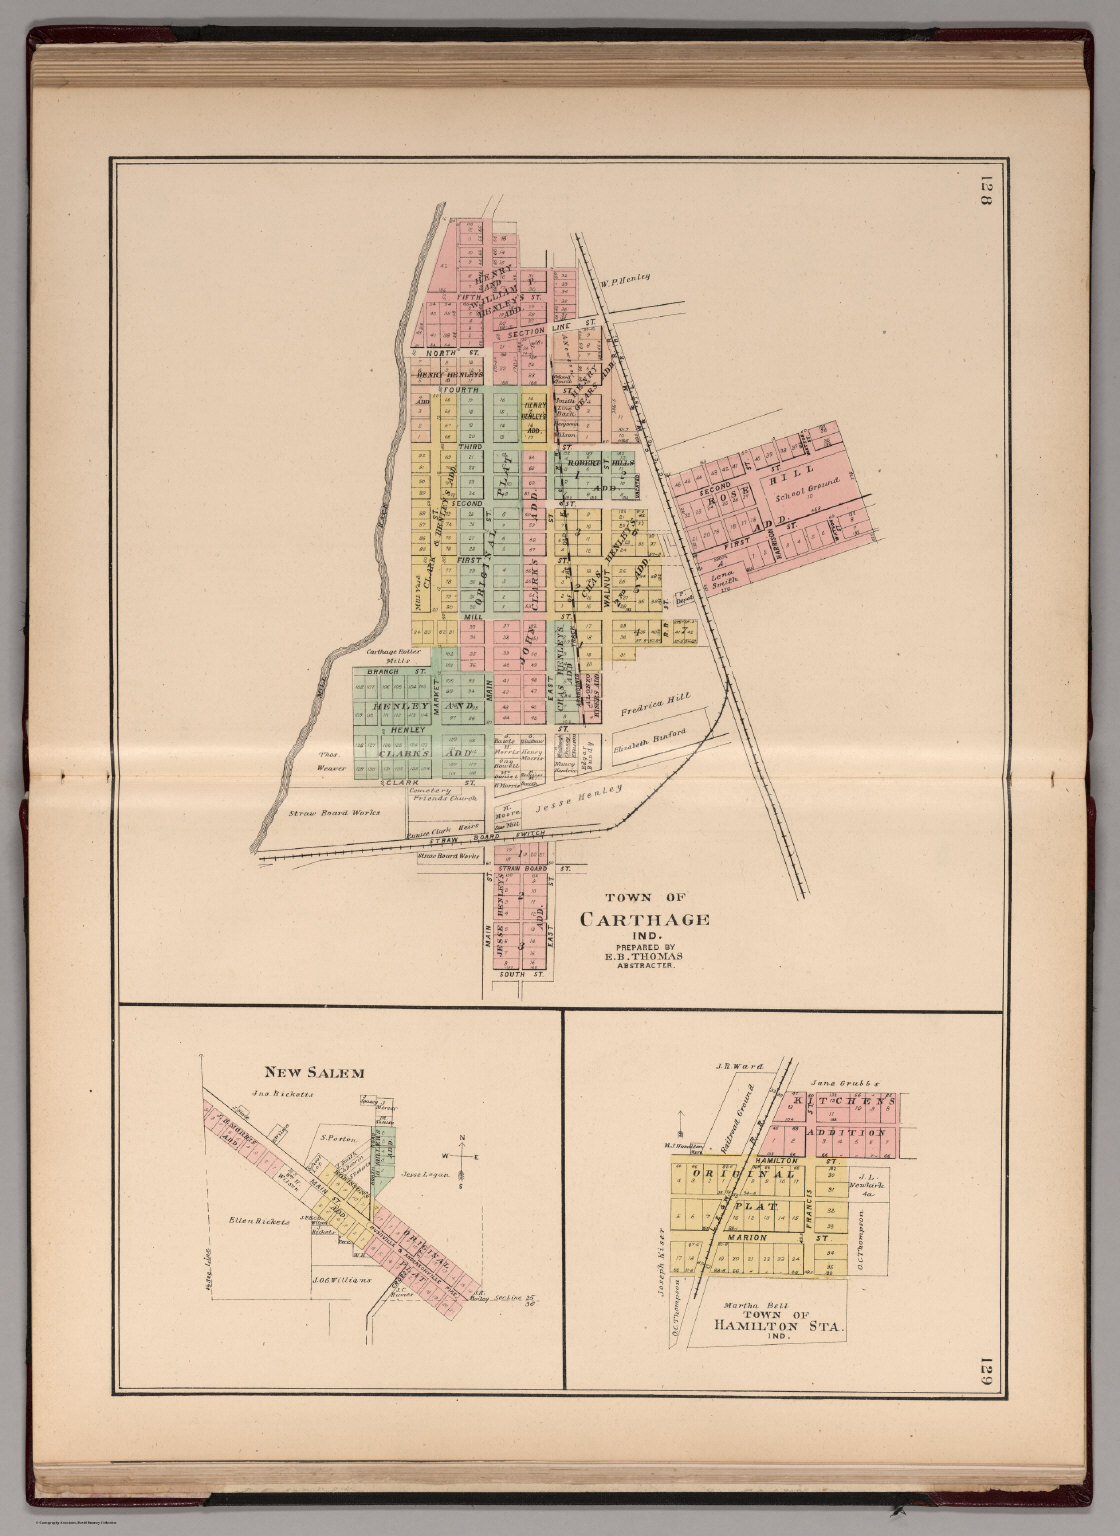 Carthage, New Salem, and Hamilton Station, Rush County